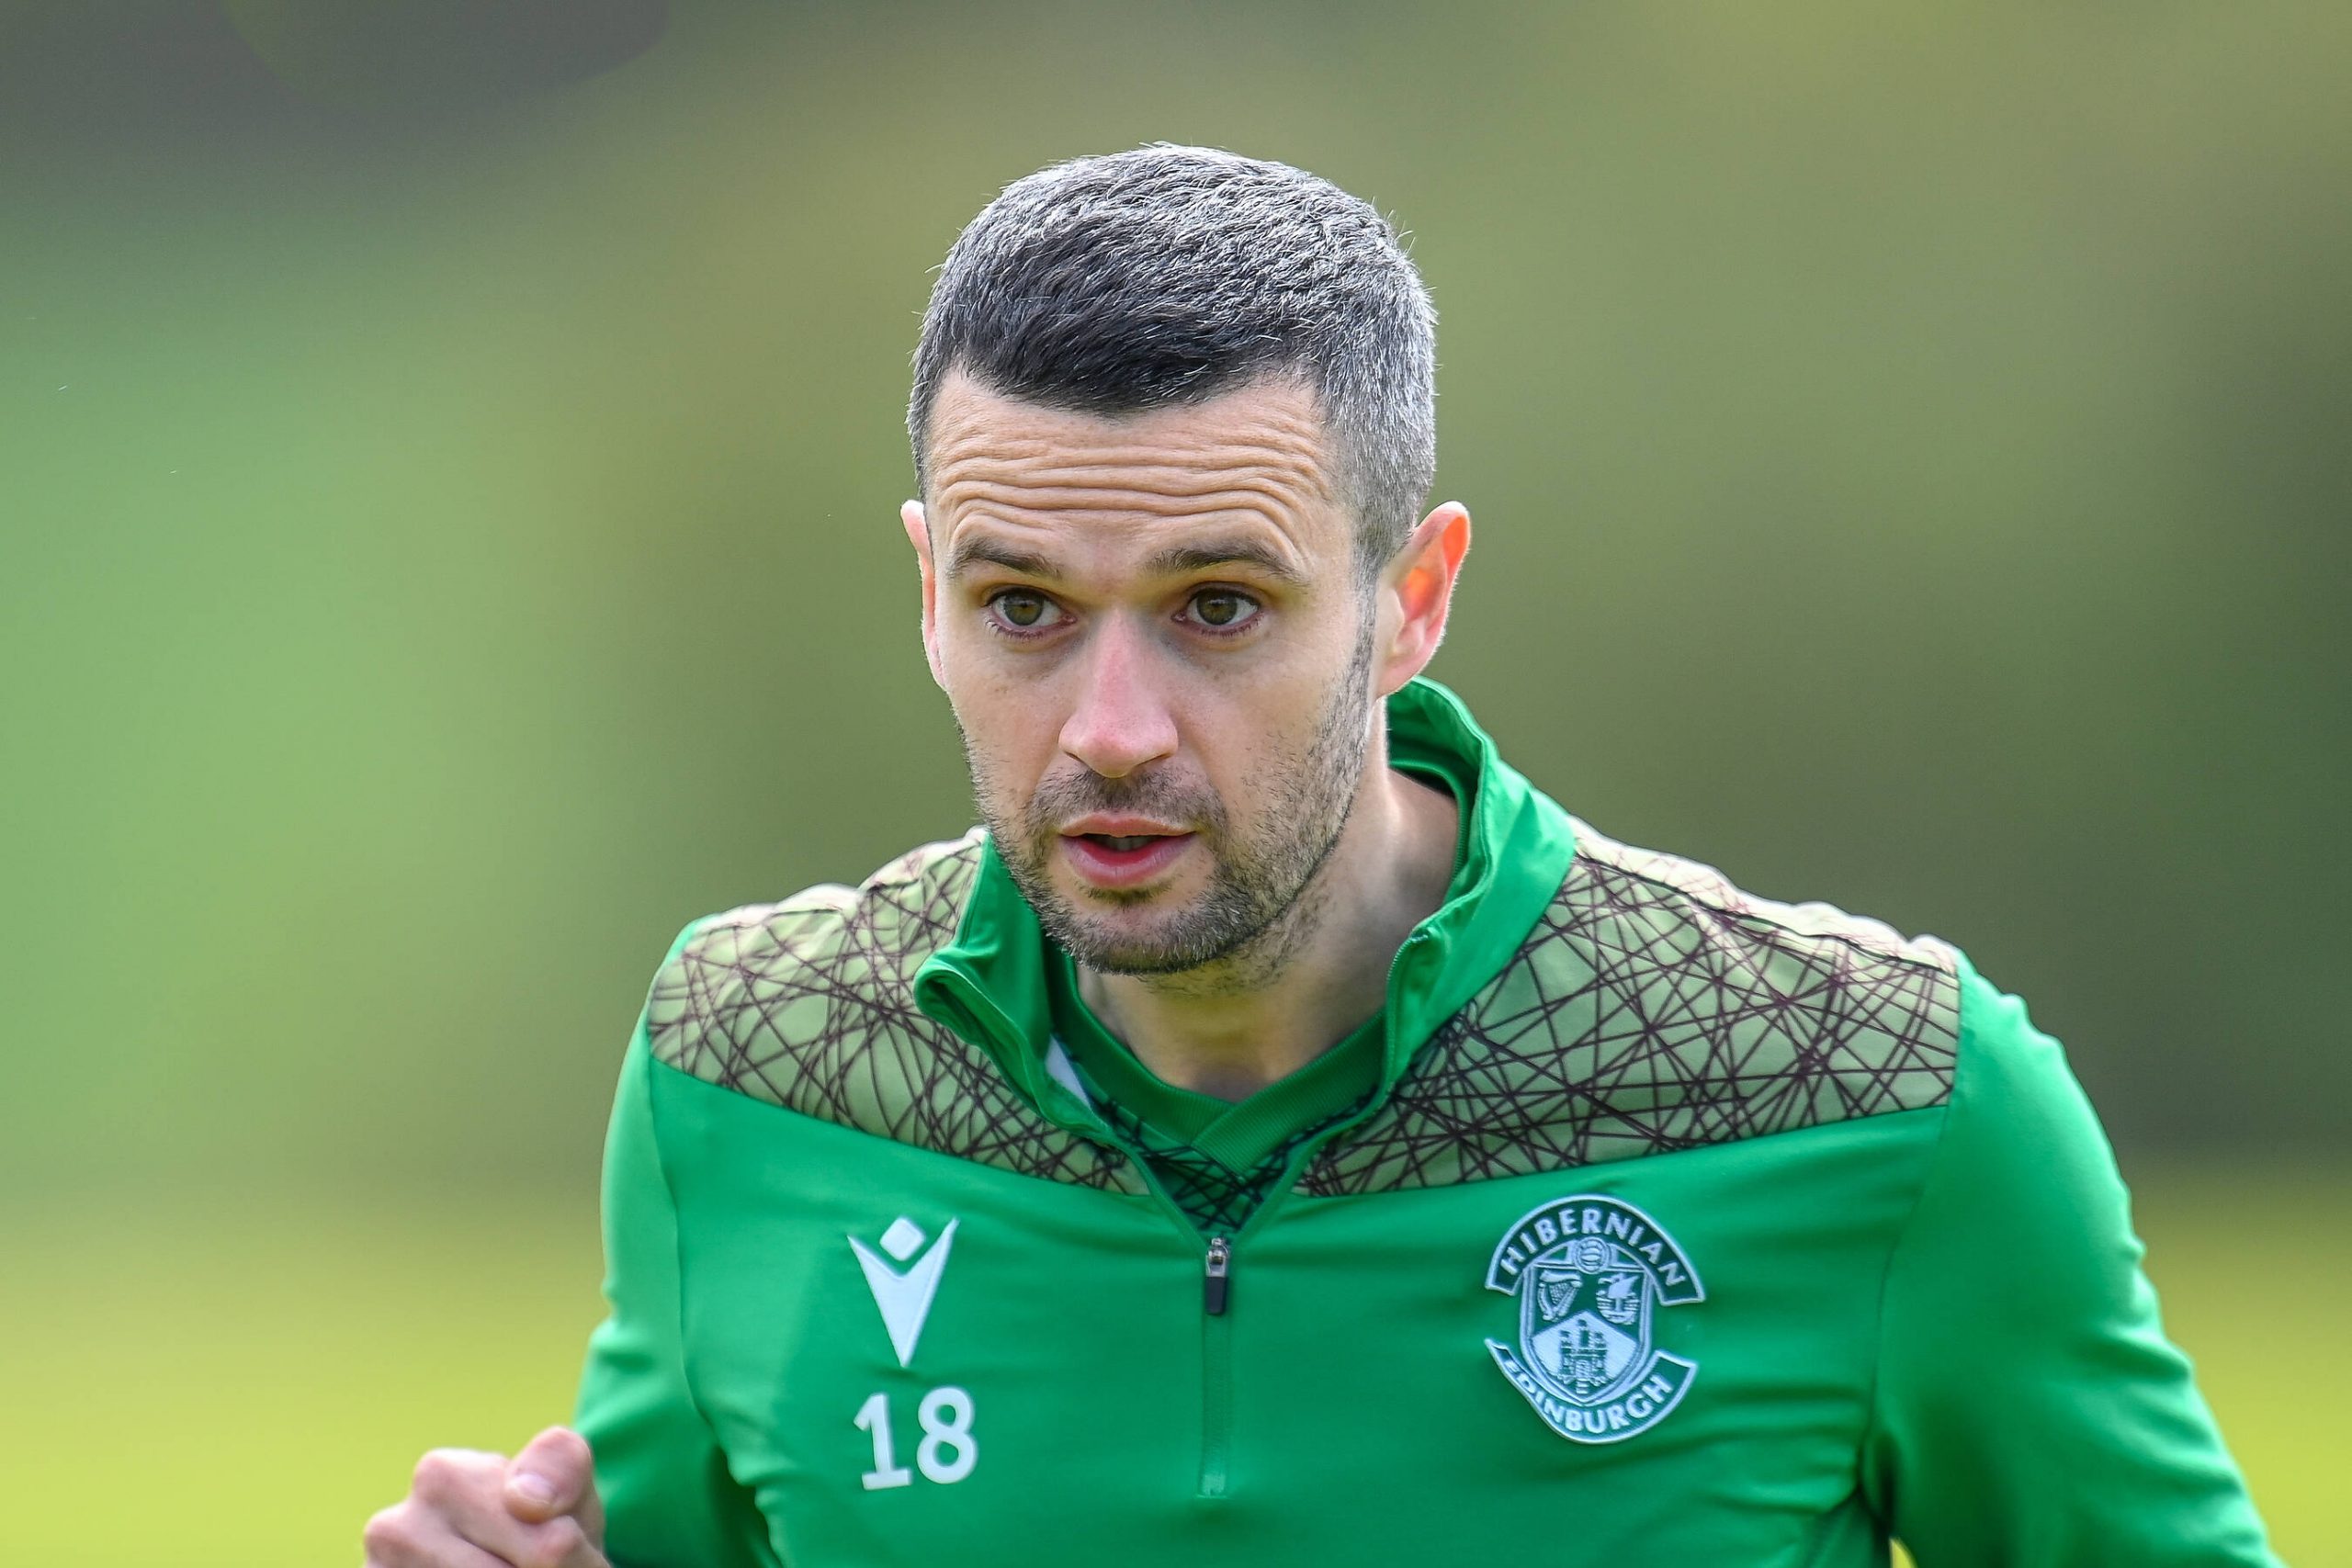 Jamie Muprhy exits Rangers permanently